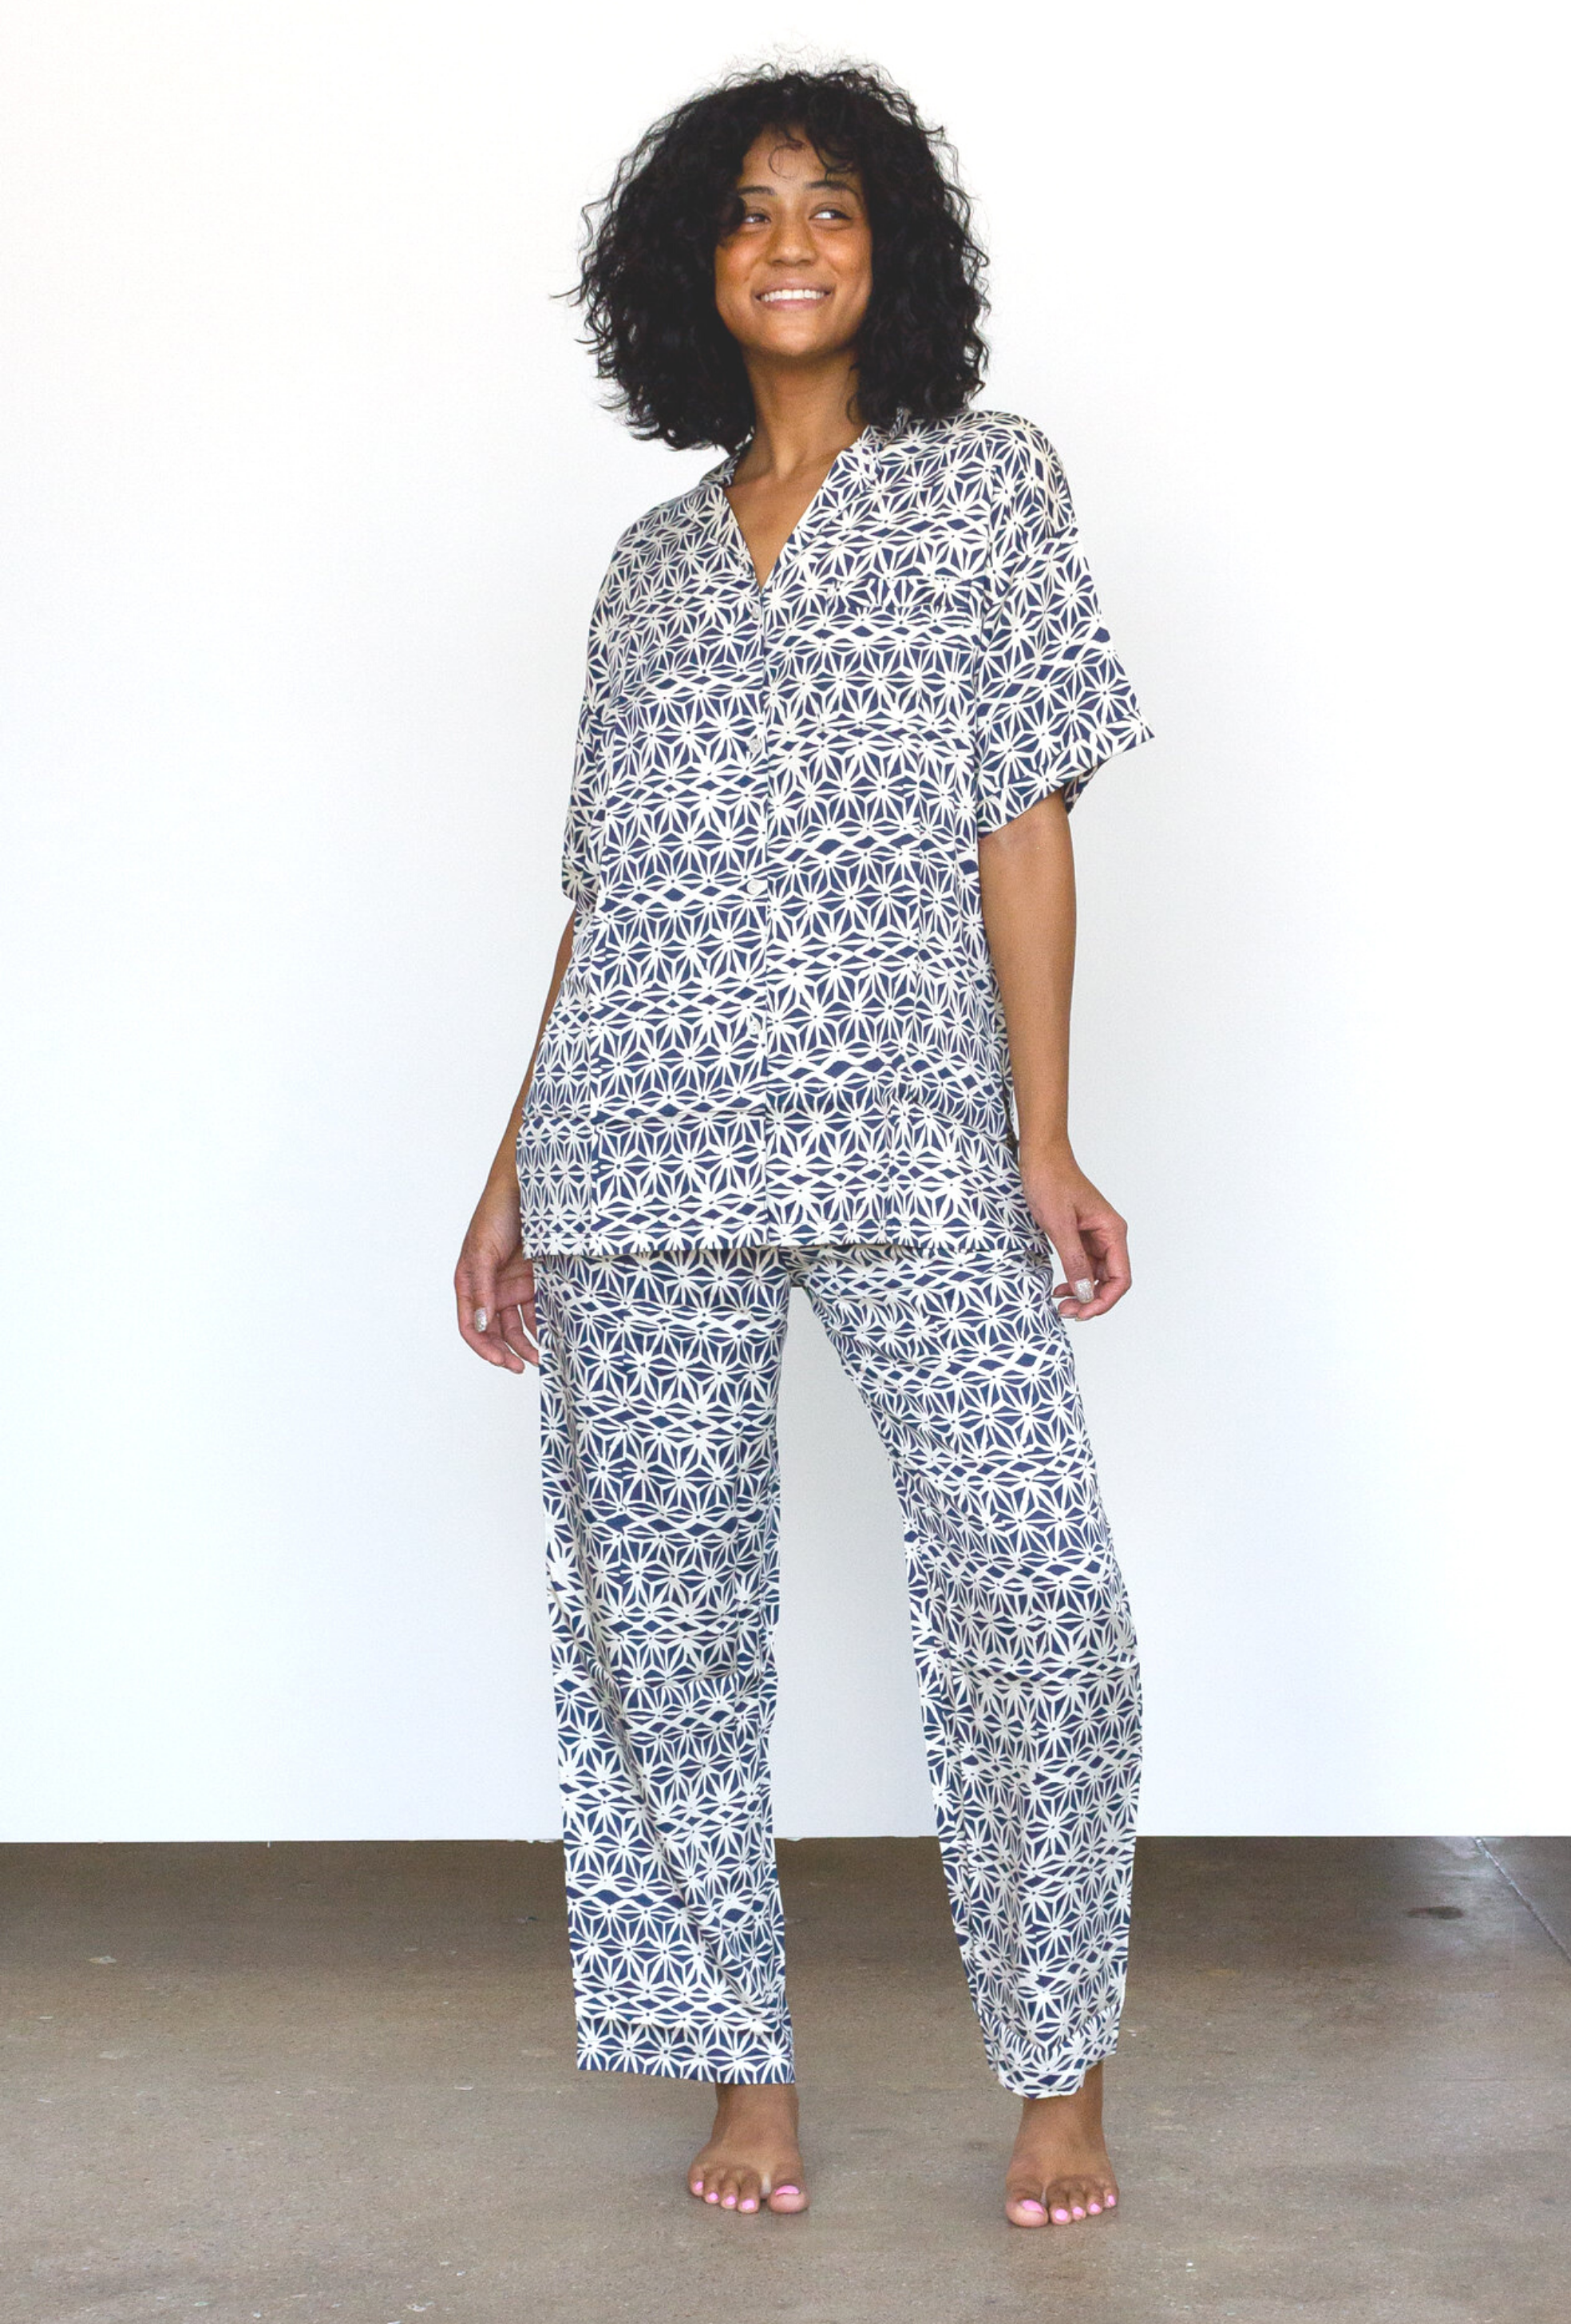 Geo Starburst Modal Pajama Set in Navy + Cream by Symbology Clothing